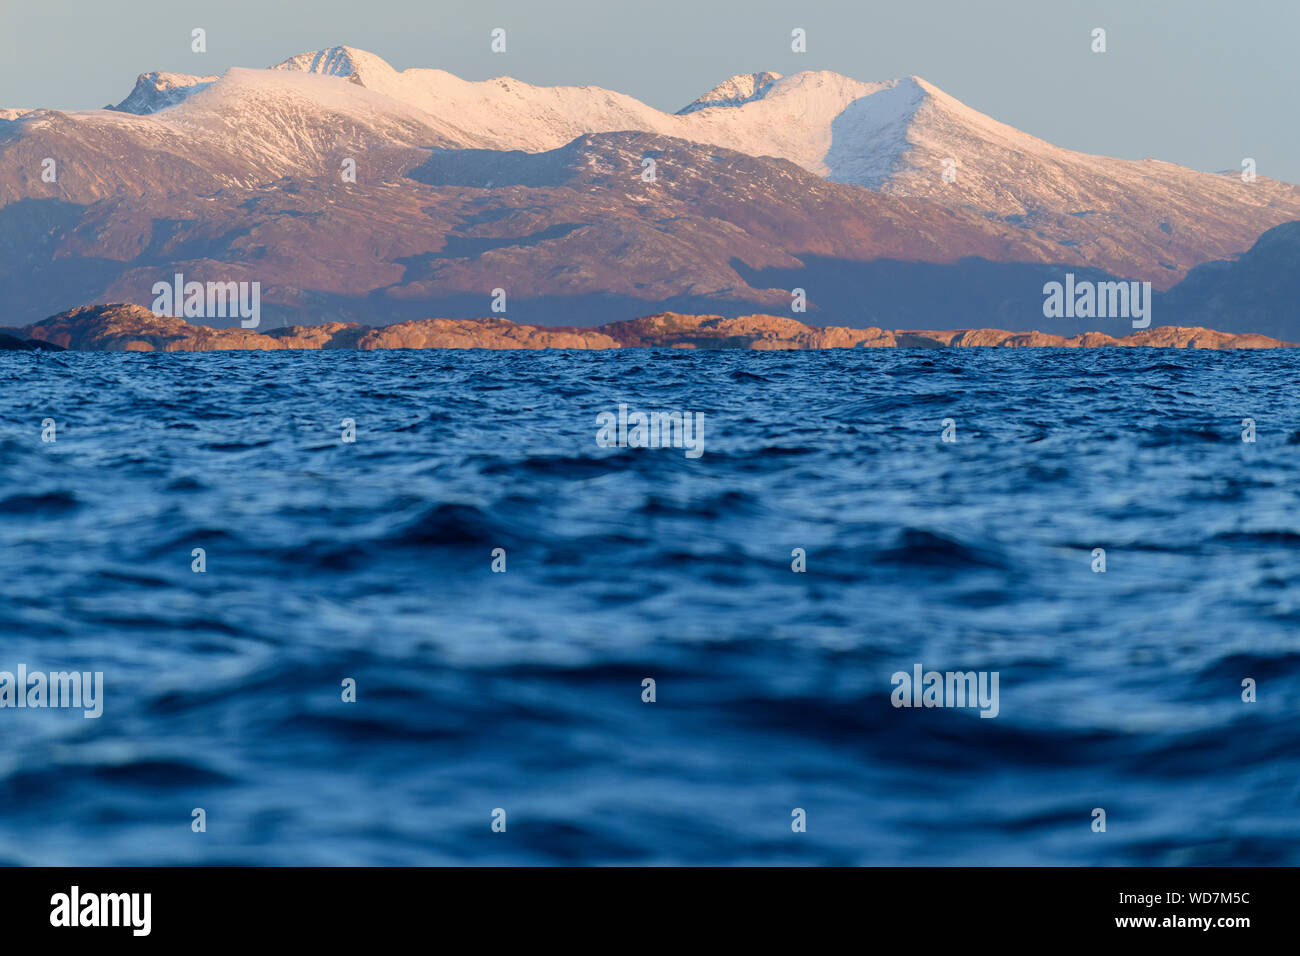 Sunsice on the Sea, Norwegian Atlantic, -, Kvaloyvagen, Norway, Atlantic Ocean Stock Photo